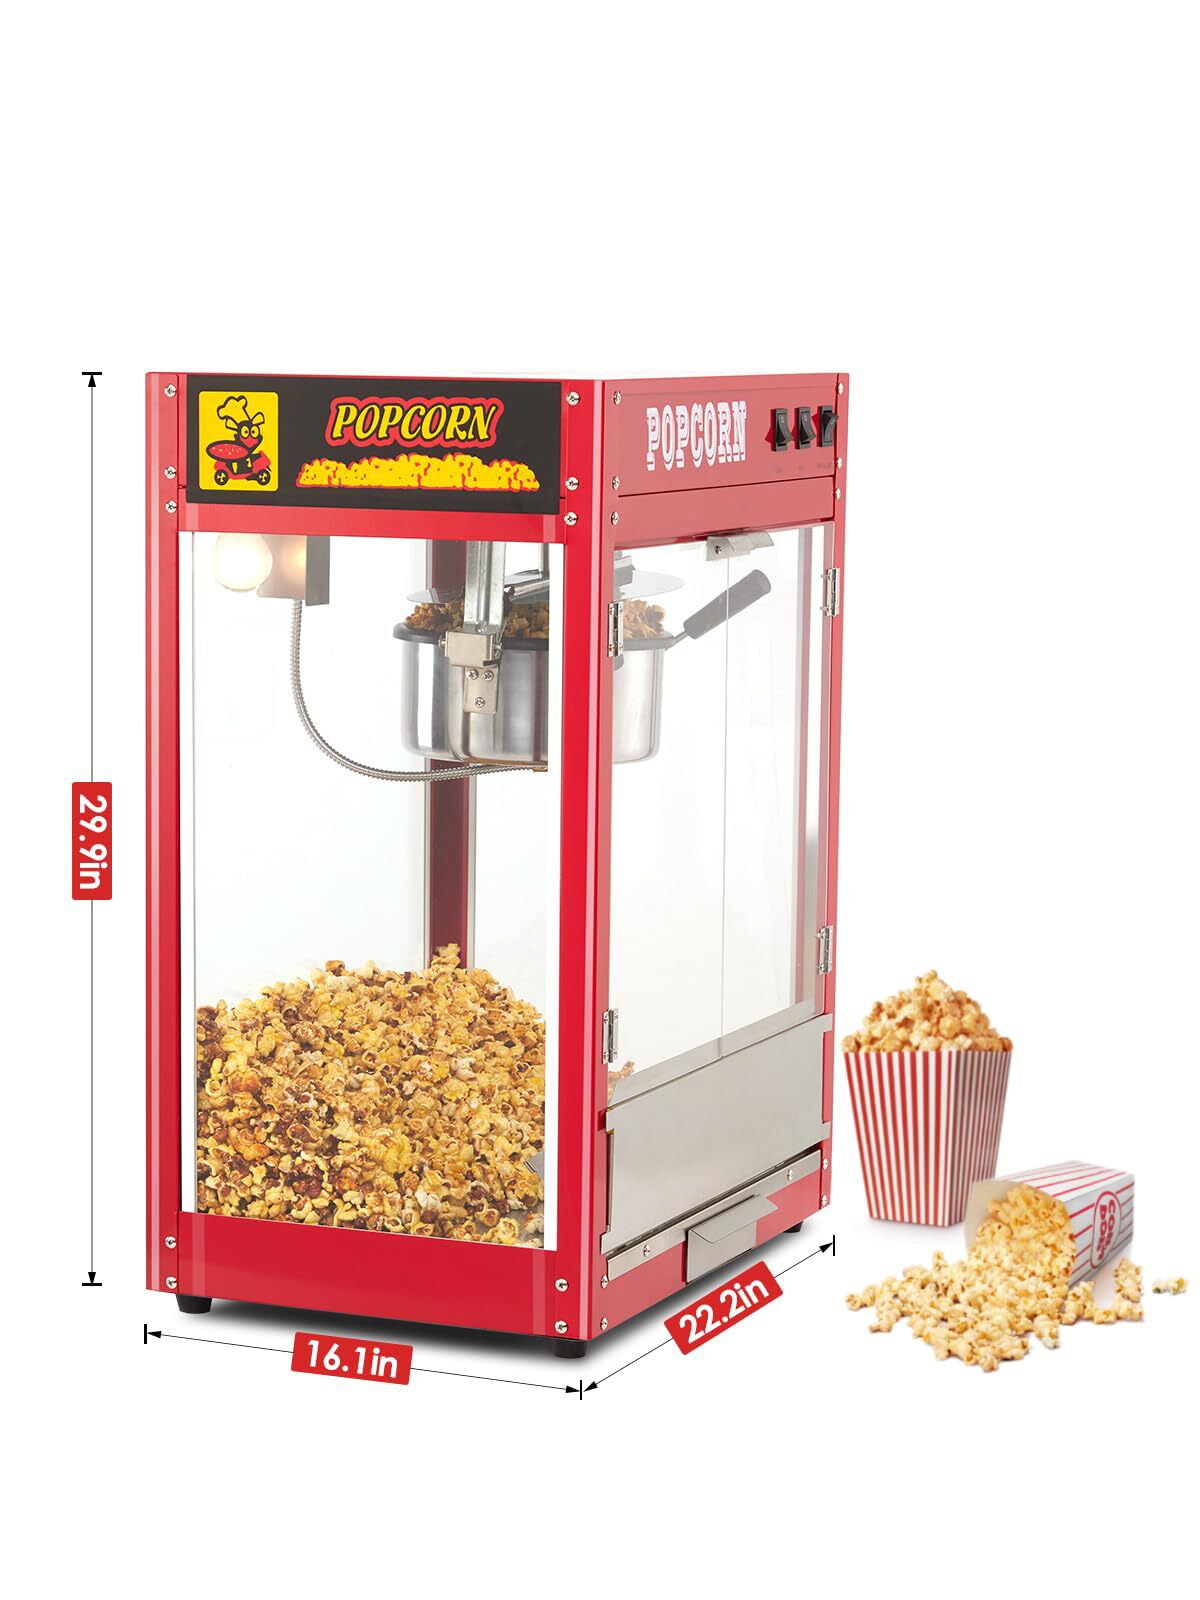 Popcorn machine-tabletop, Full Size, Commercial Popcorn Machine